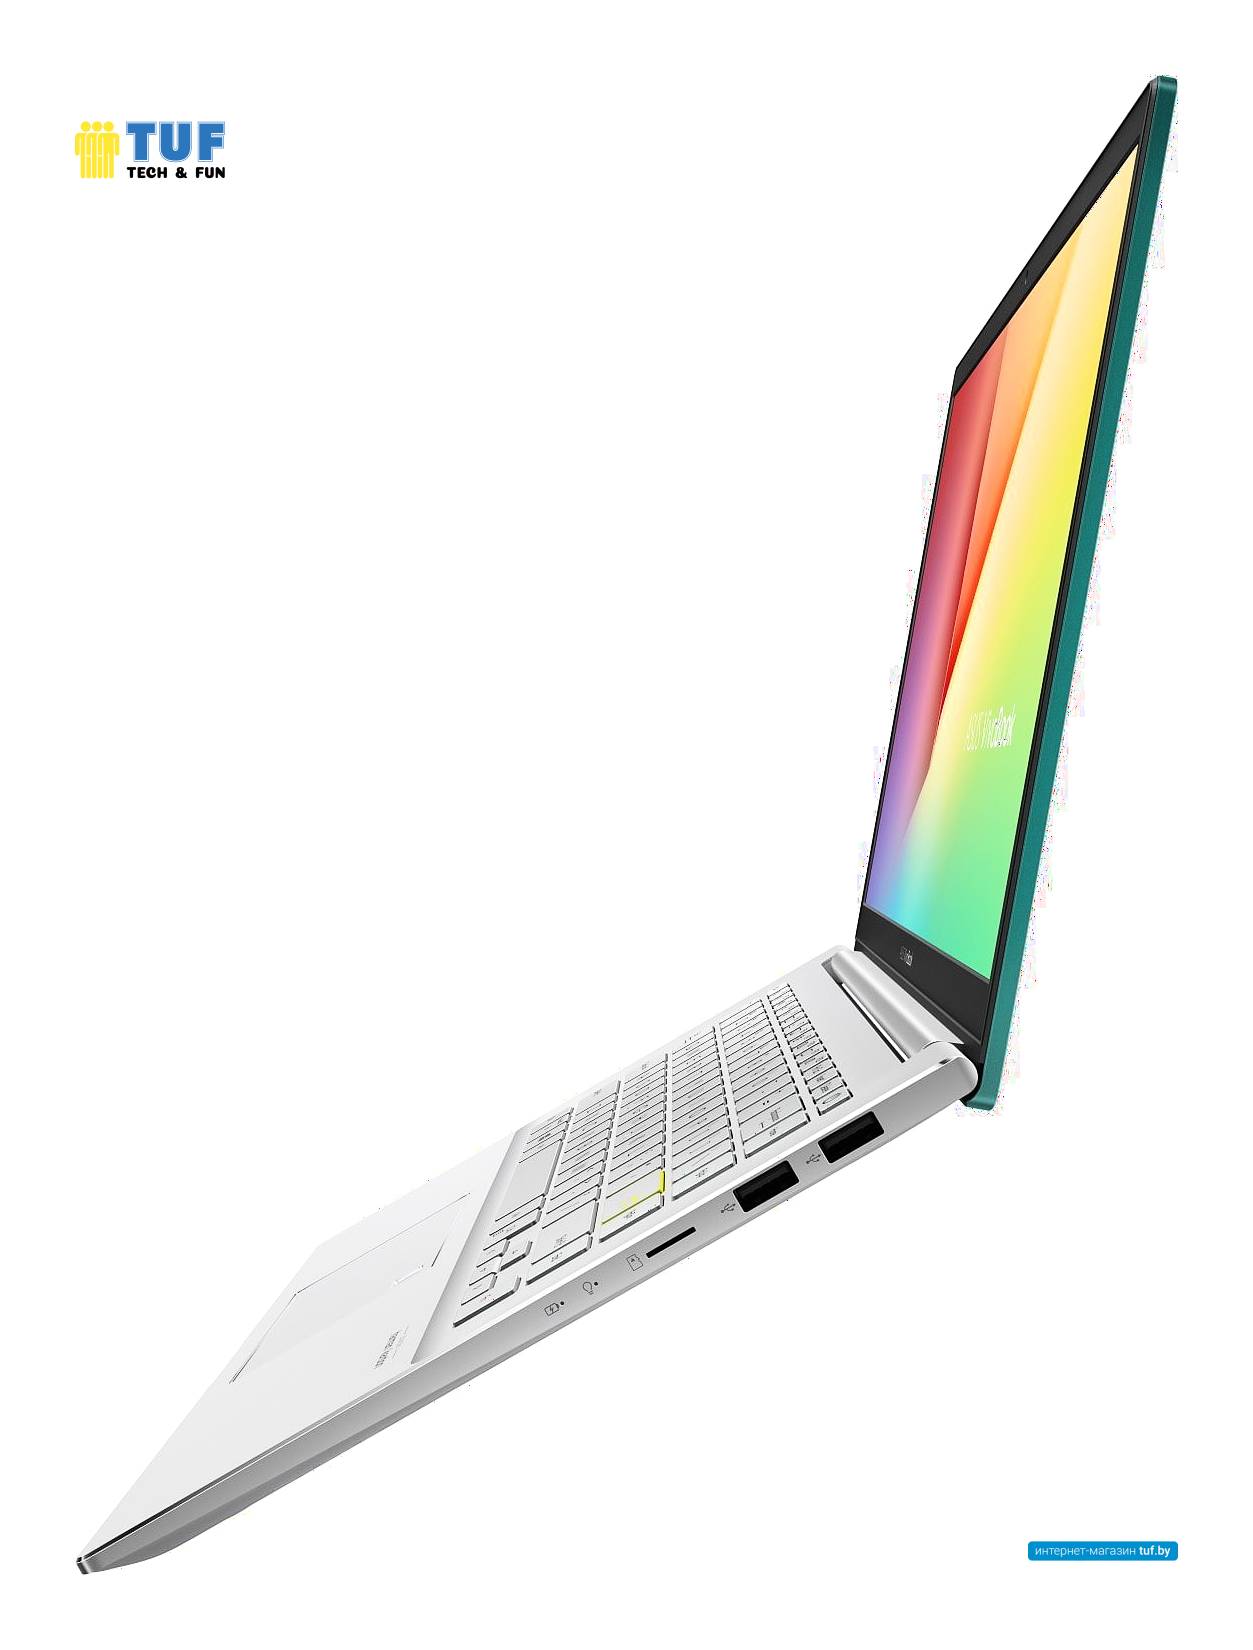 Ноутбук ASUS VivoBook S14 S433EA-EB1014T